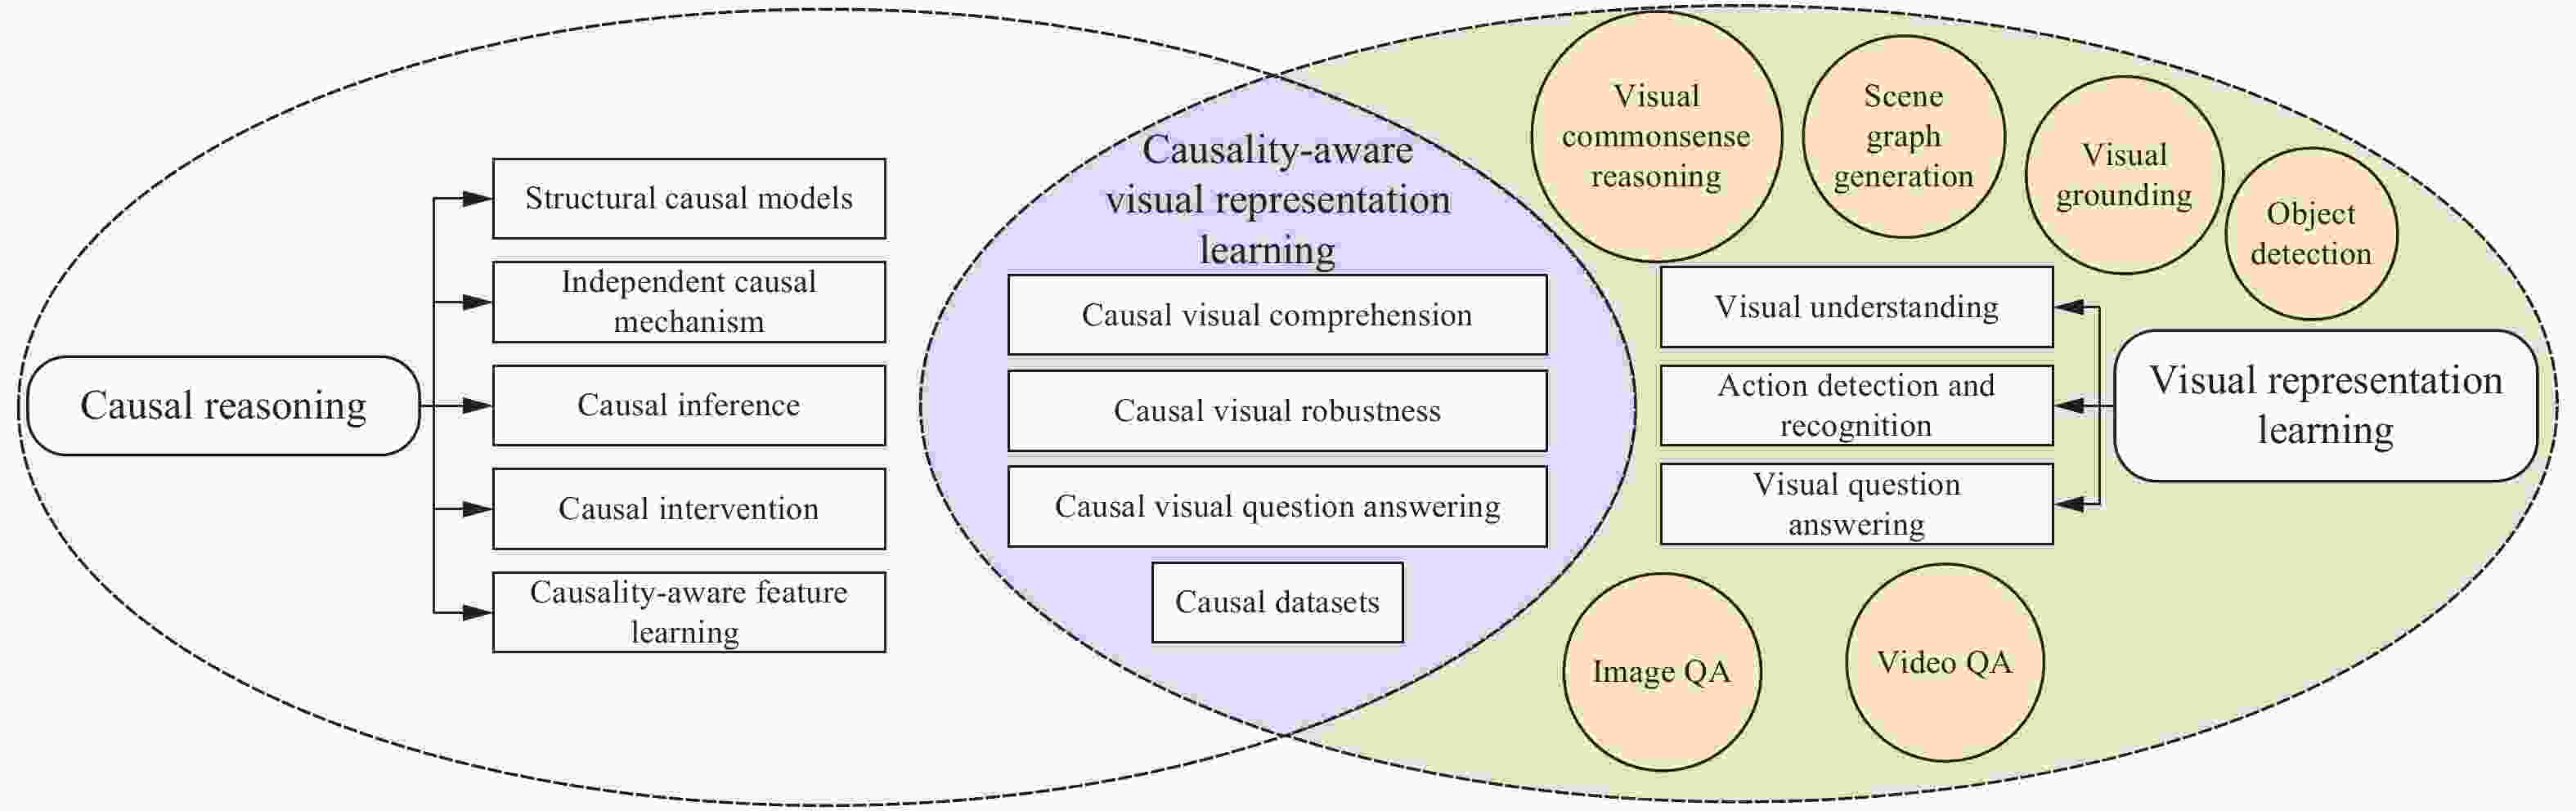 causal reasoning meets visual representation learning a prospective study